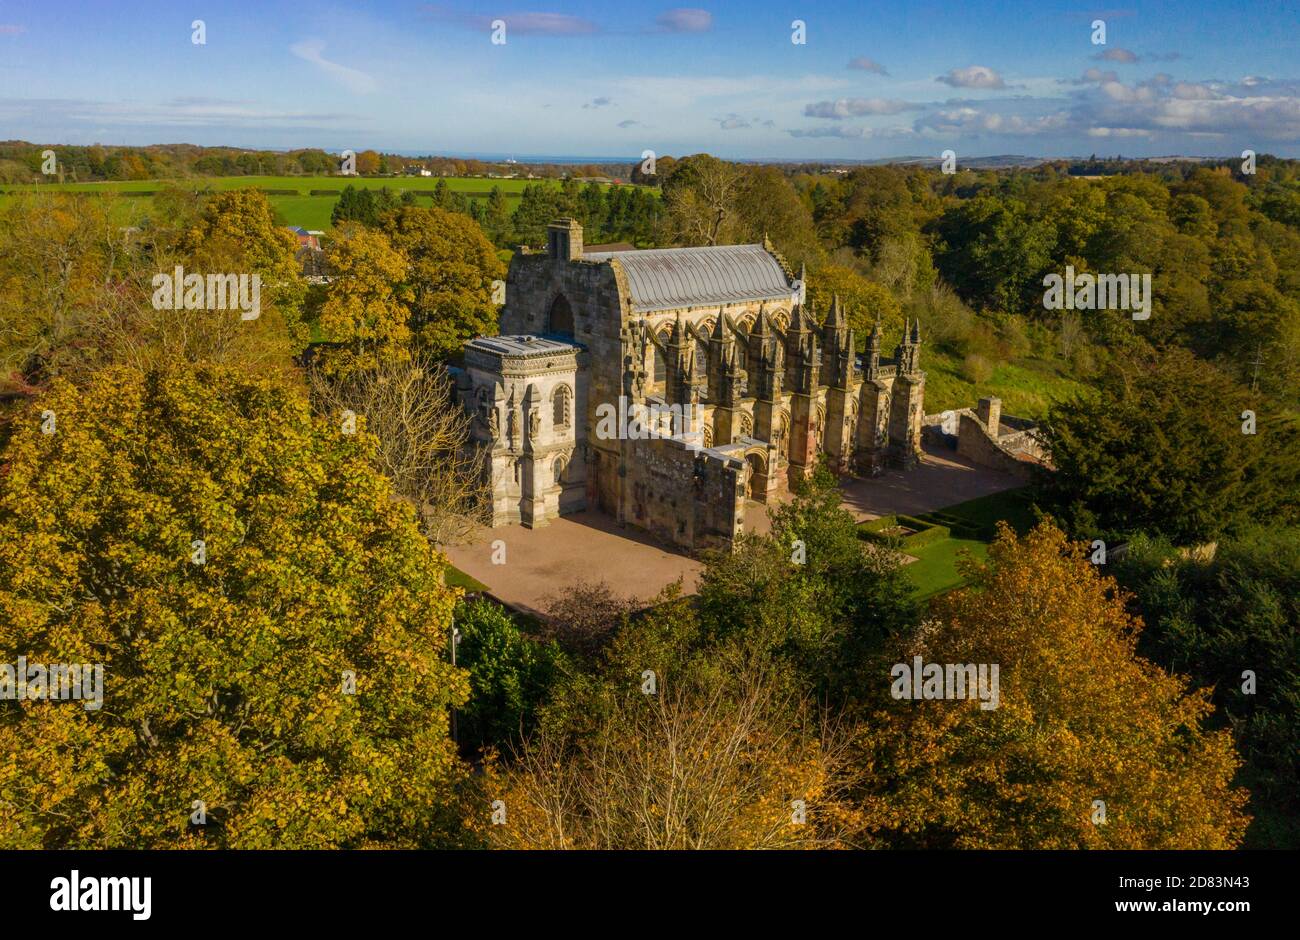 Rosslyn Chapel Roslin Edinburgh, Midlothian. Ecosse Royaume-Uni photo Phil Wilkinson / Alay Banque D'Images